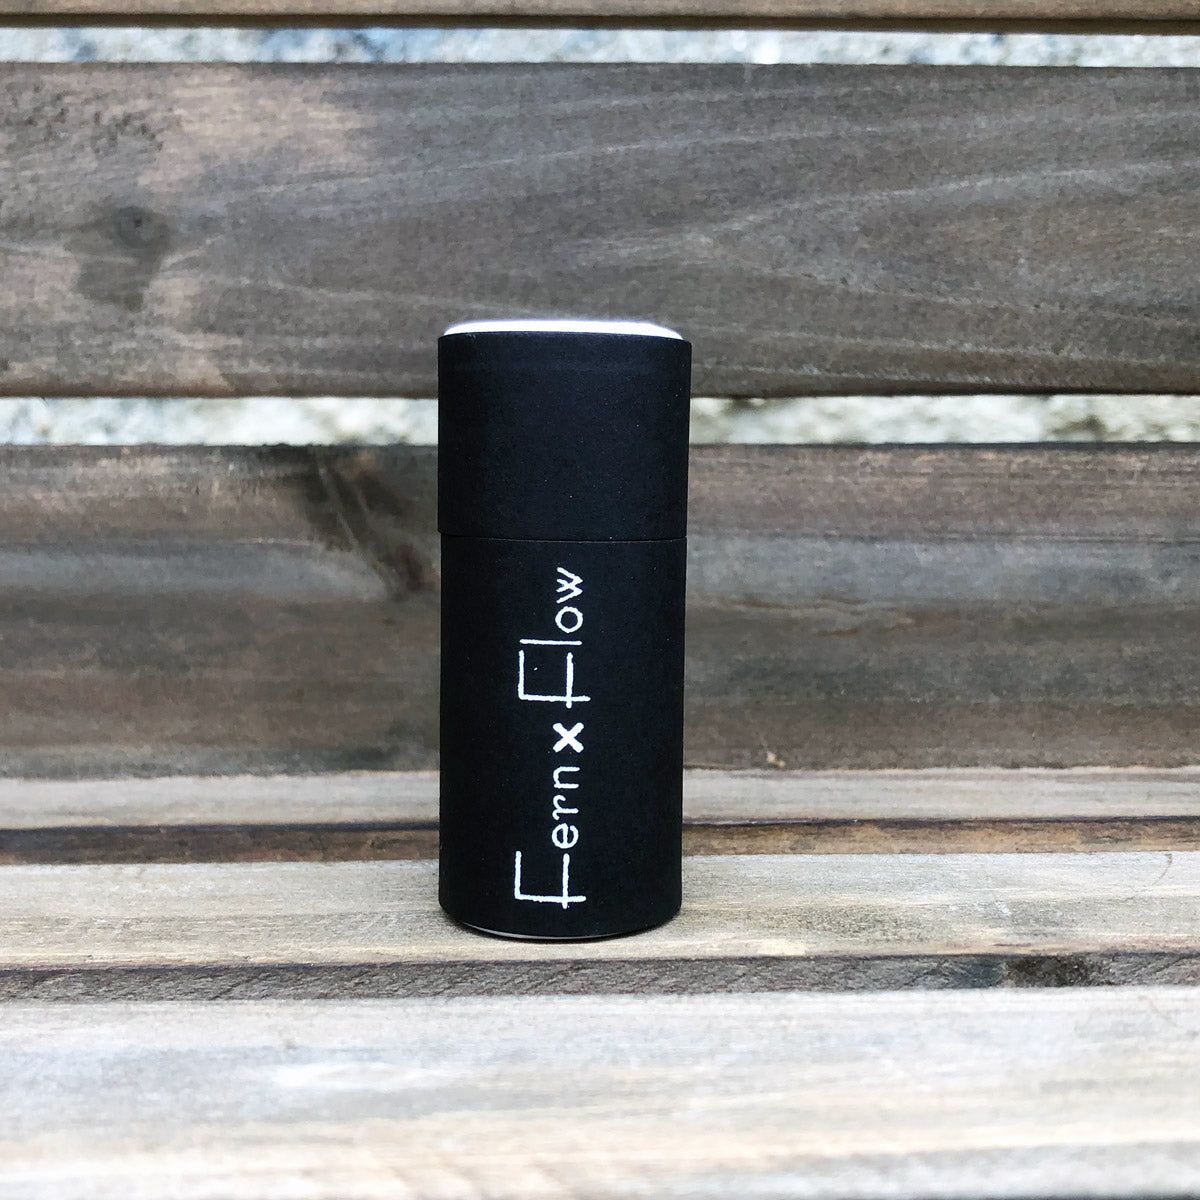 Fern x Flow, matte black, safety barrel match stick bottle against a weathered, wooden background.